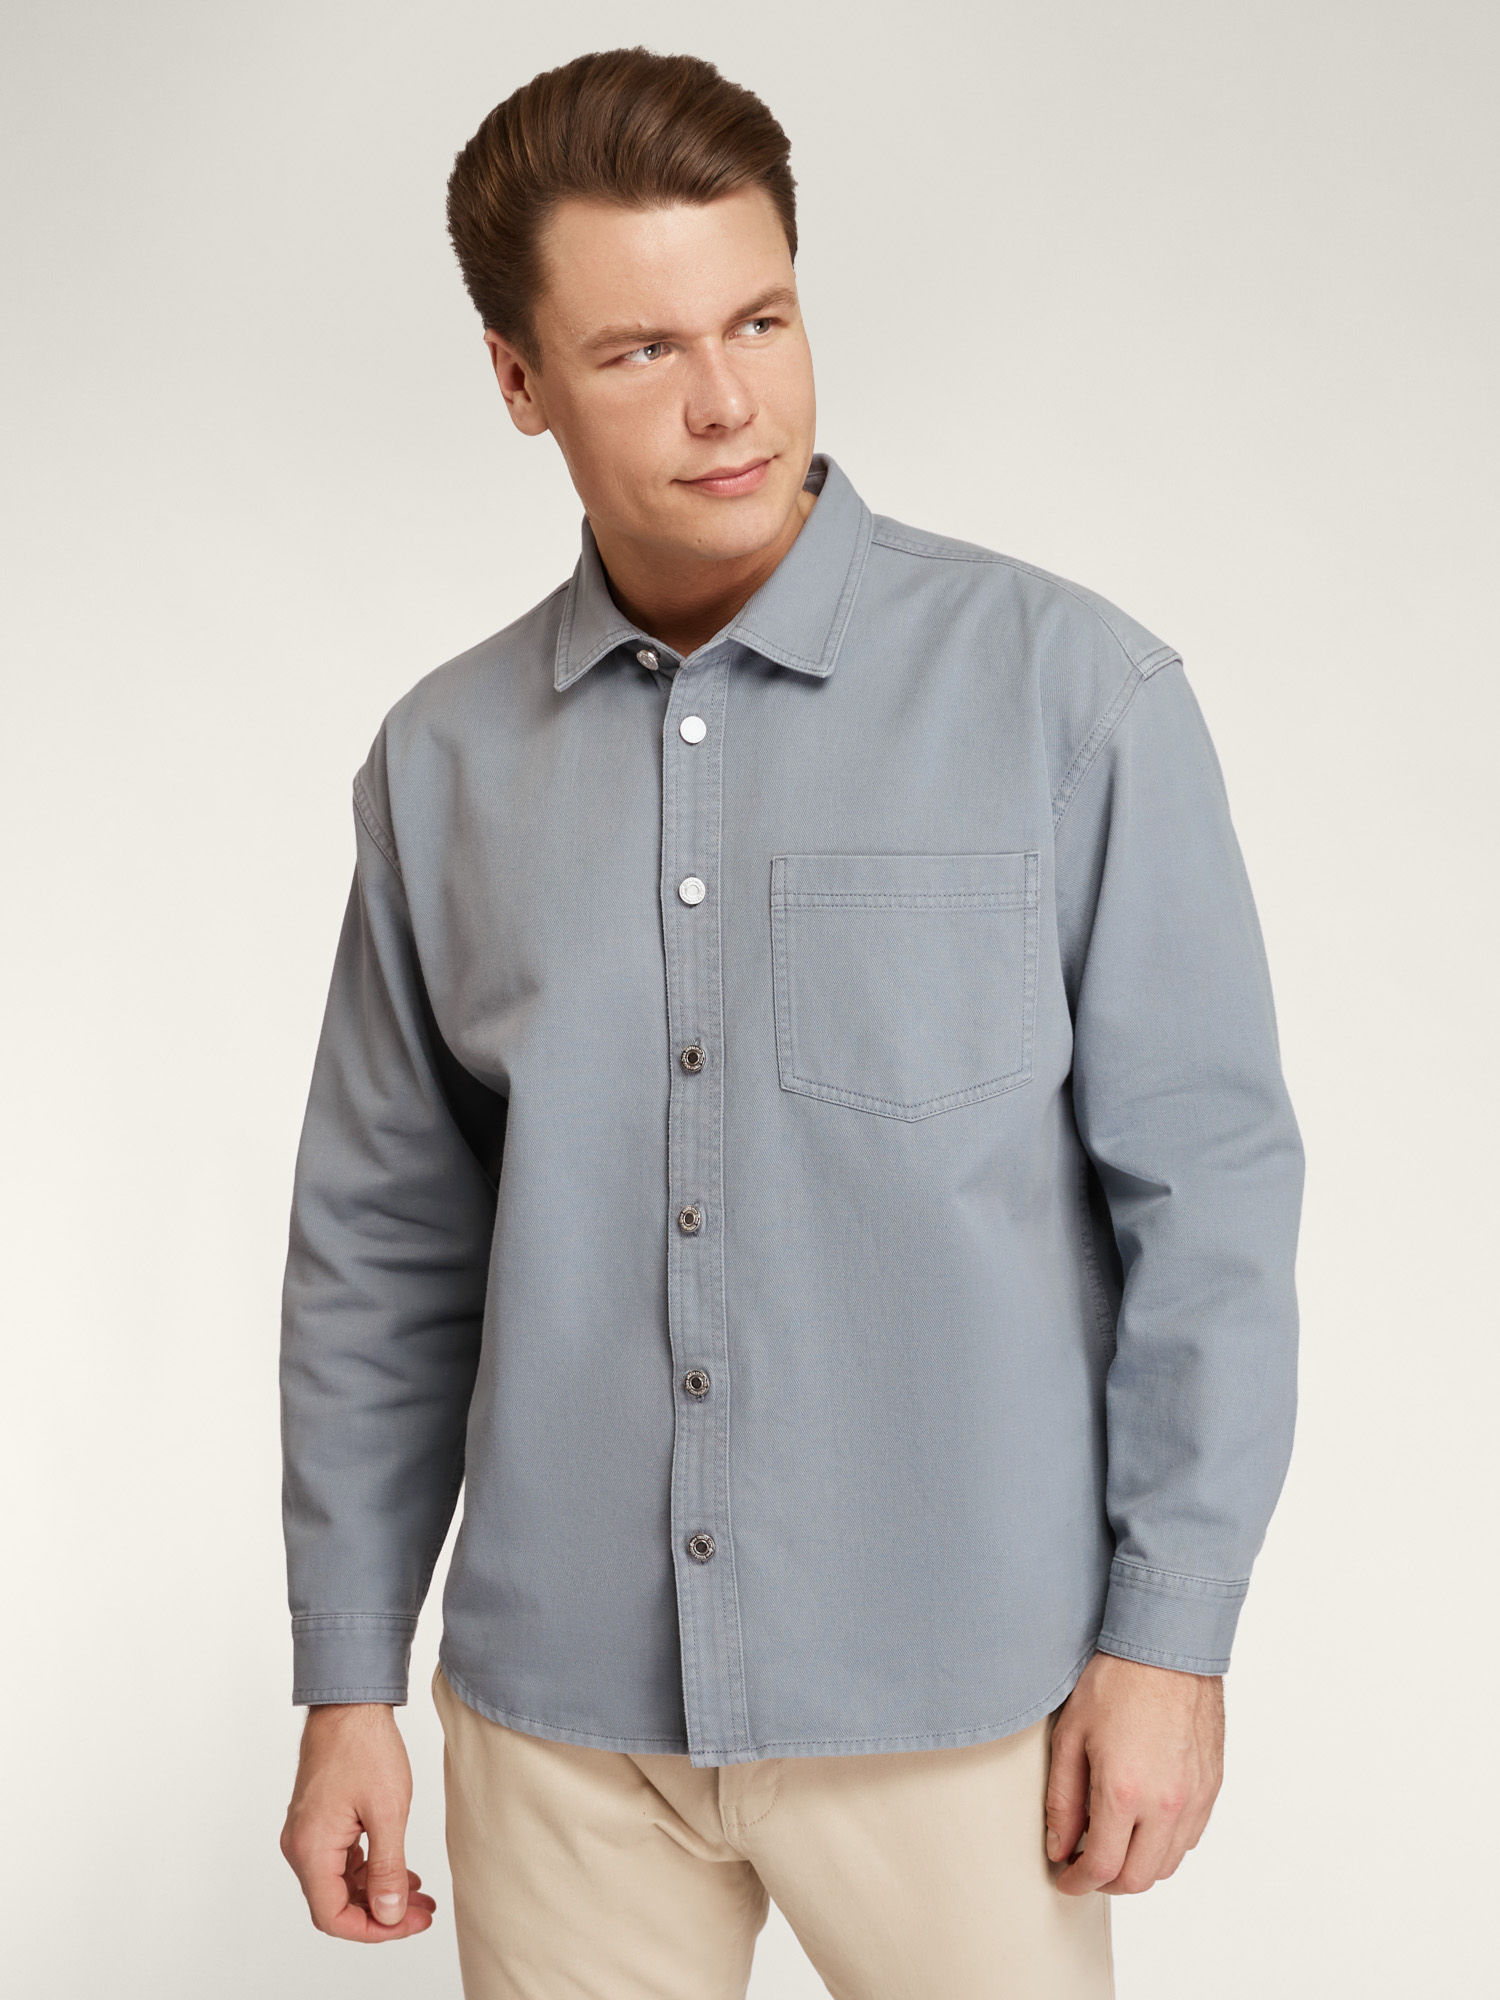 Джинсовая рубашка мужская oodji 6L430002M синяя 2XL